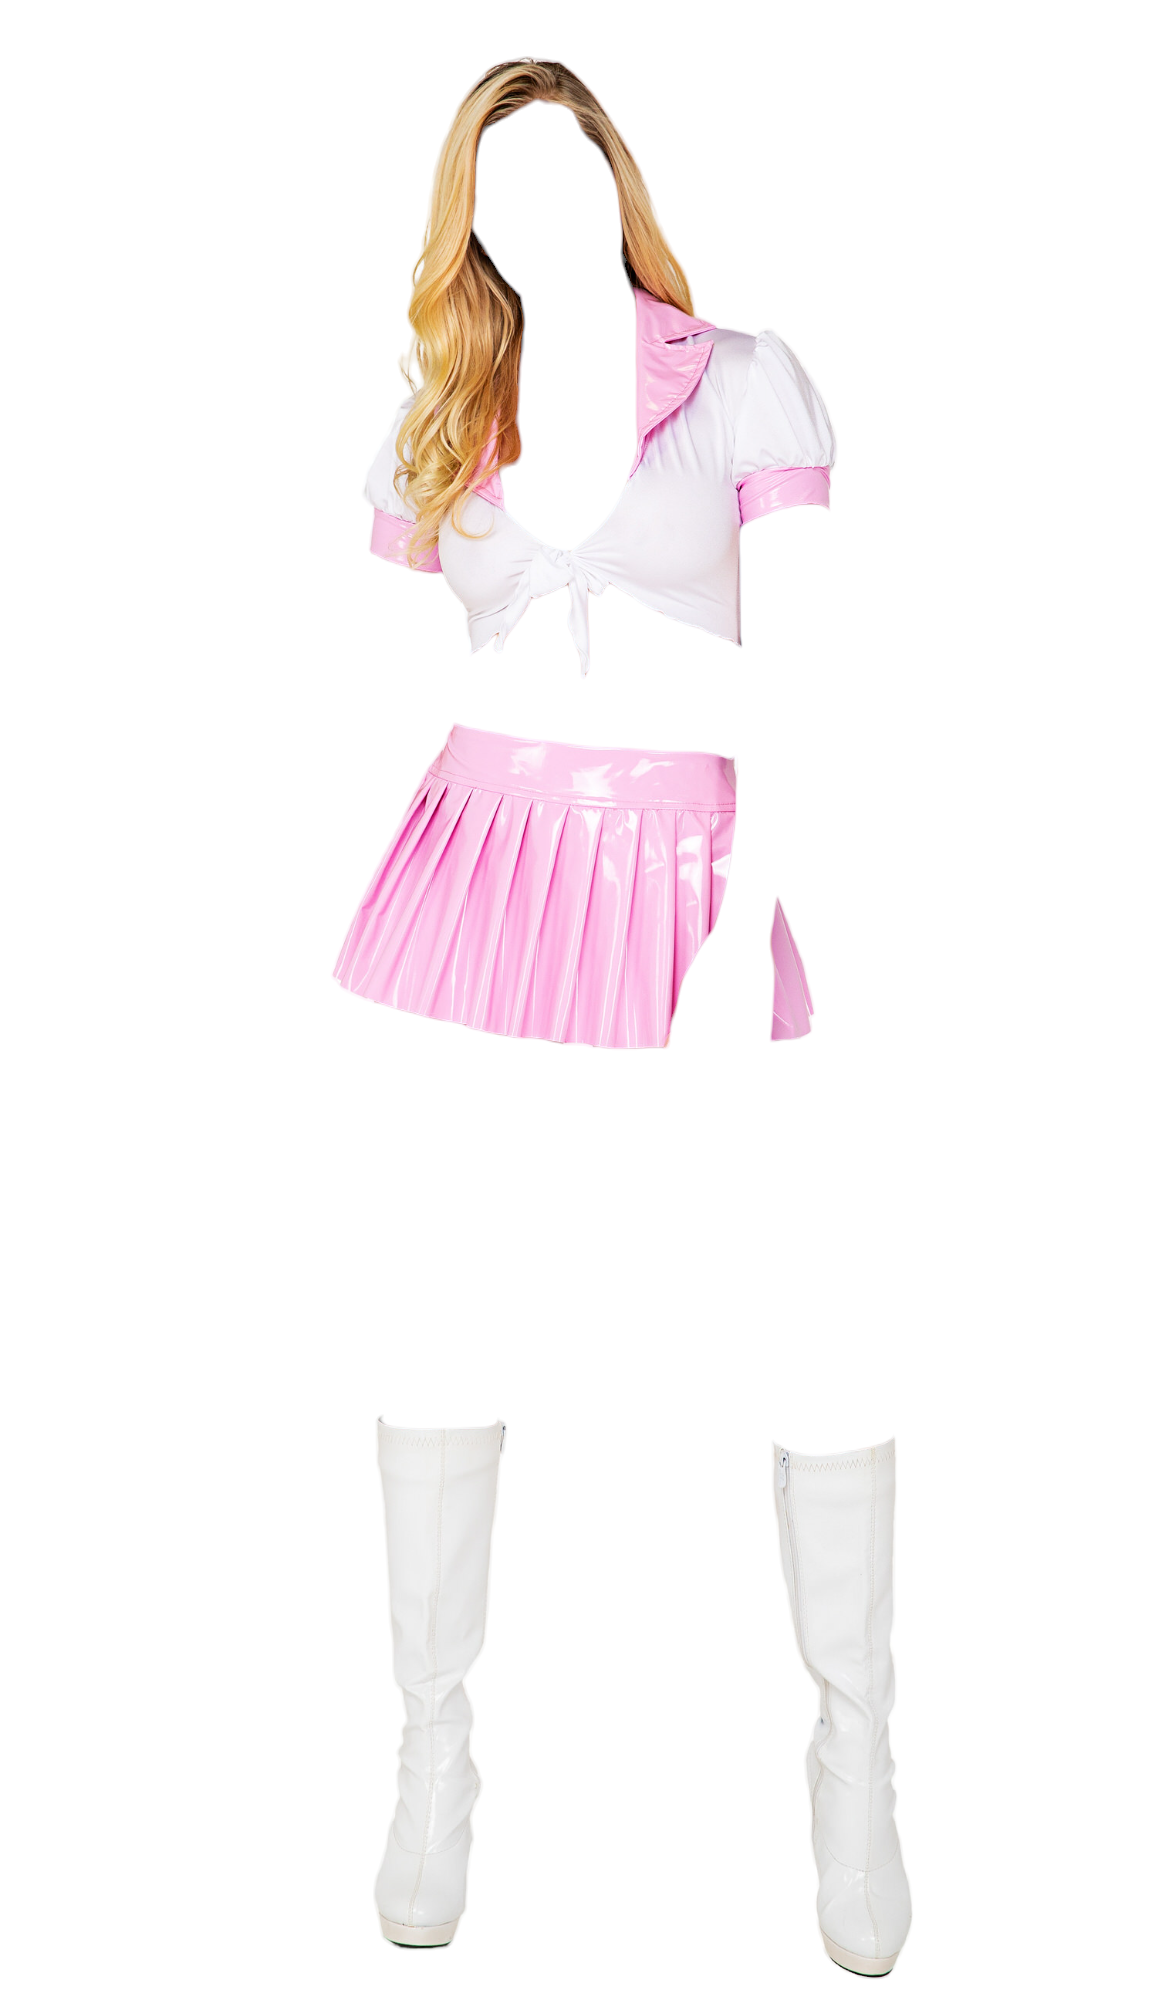 Roma Costume 2 PC Pink Schoolgirl Tie Top with Vinyl Skirt White/Pink